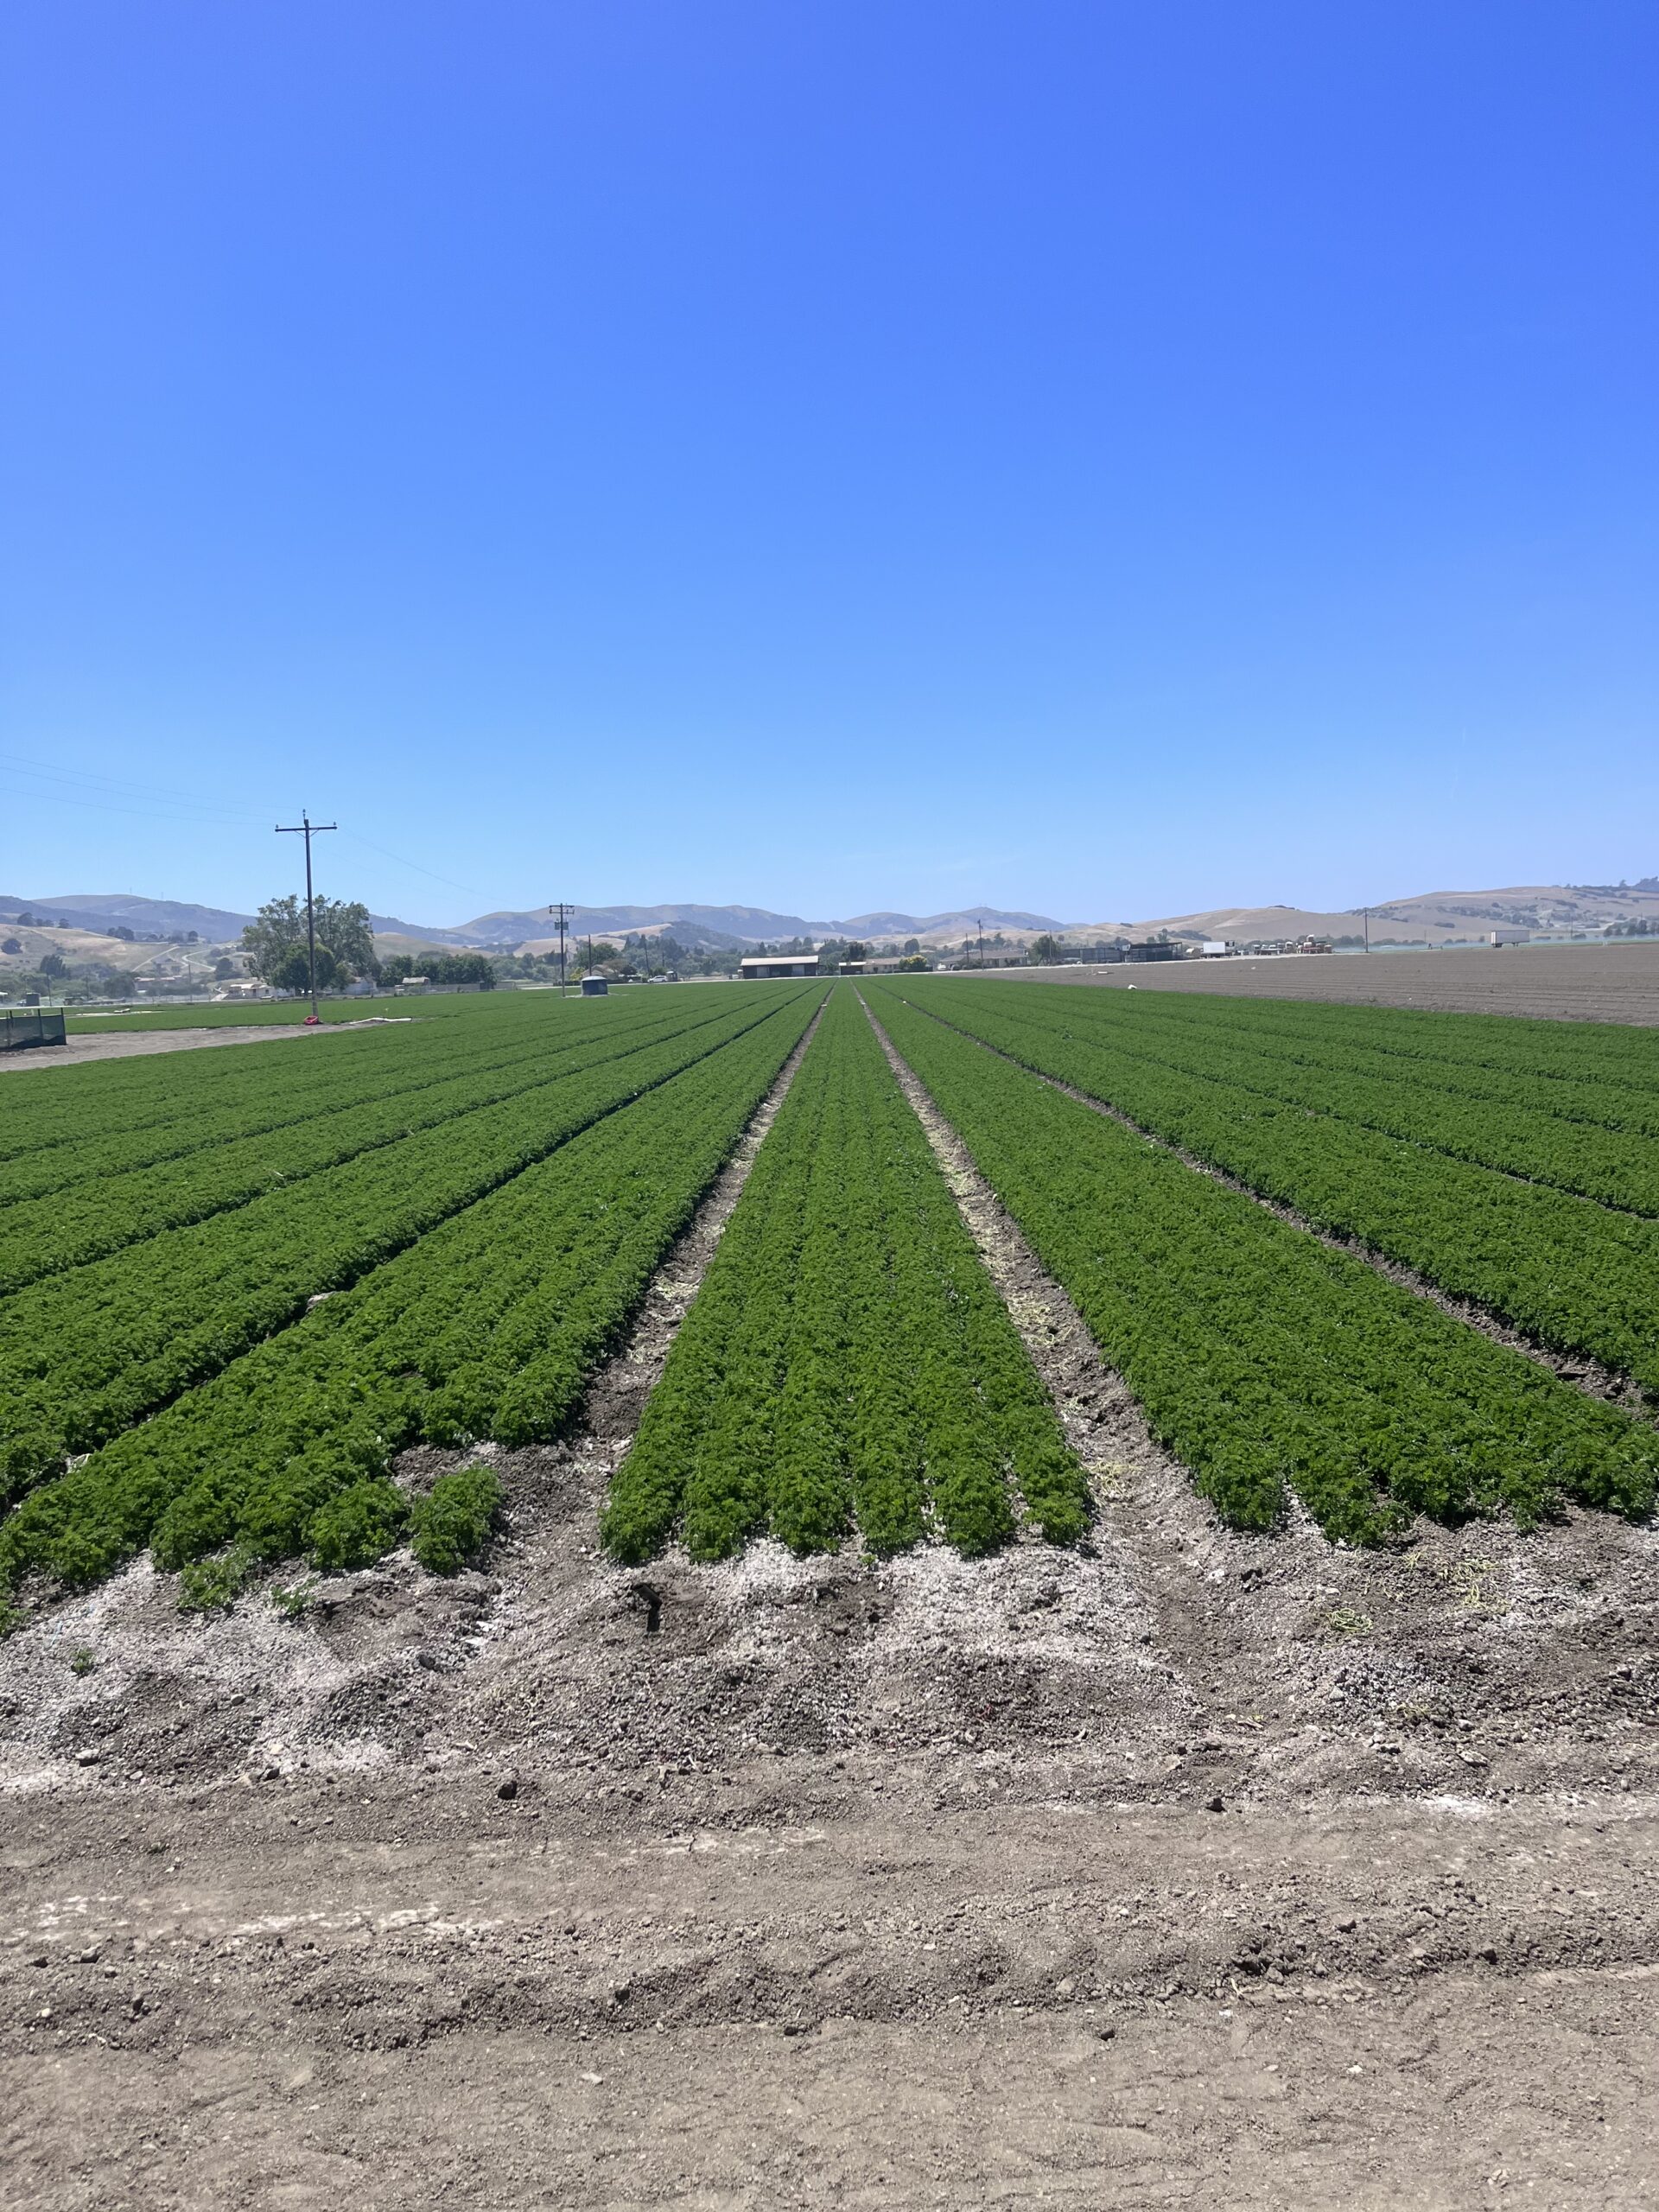 550 Cagney Rd – Farmland in San Juan Bautista CA 95045